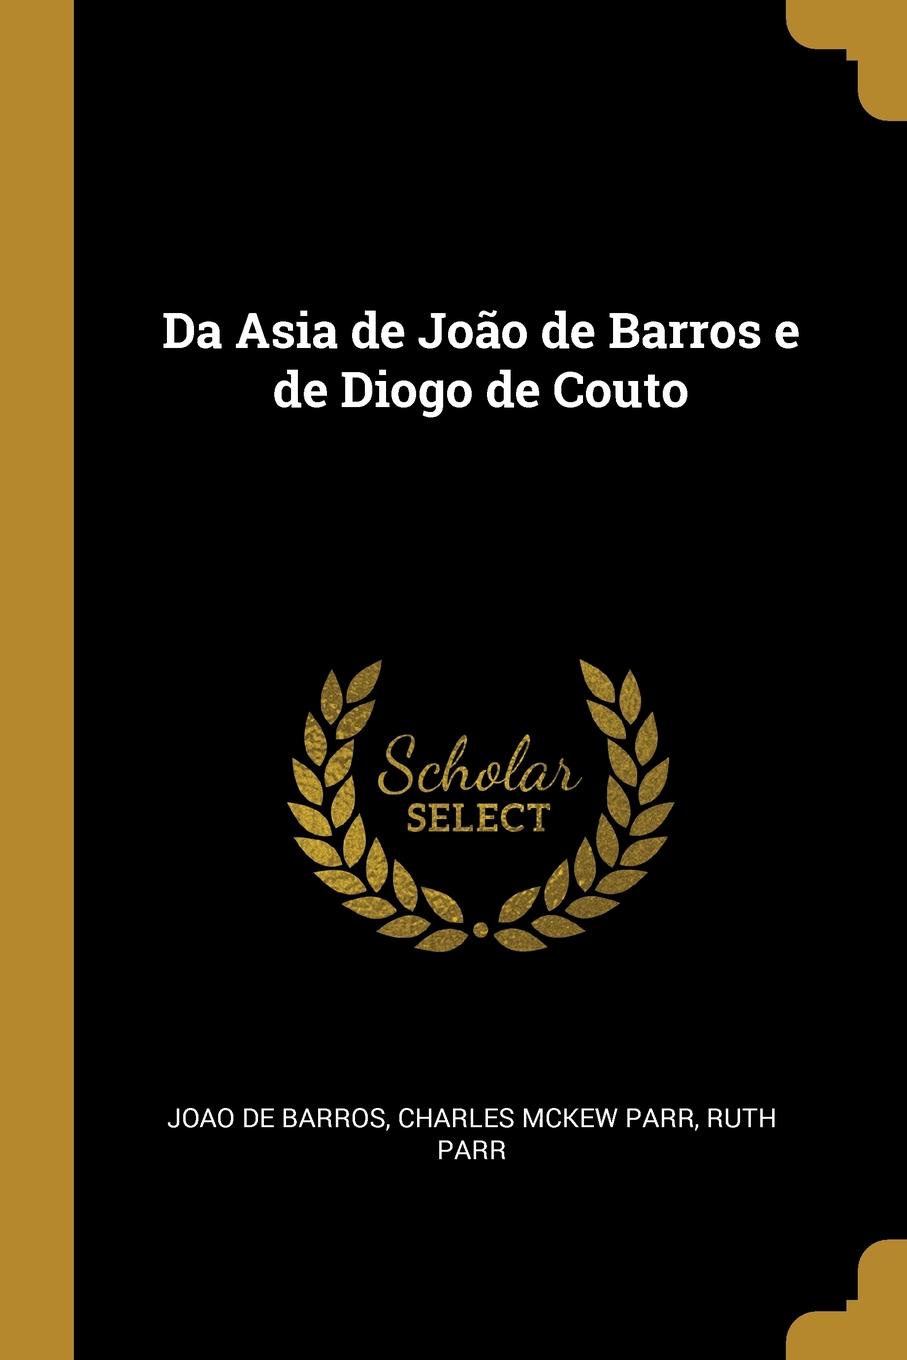 Da Asia de Joao de Barros e de Diogo de Couto